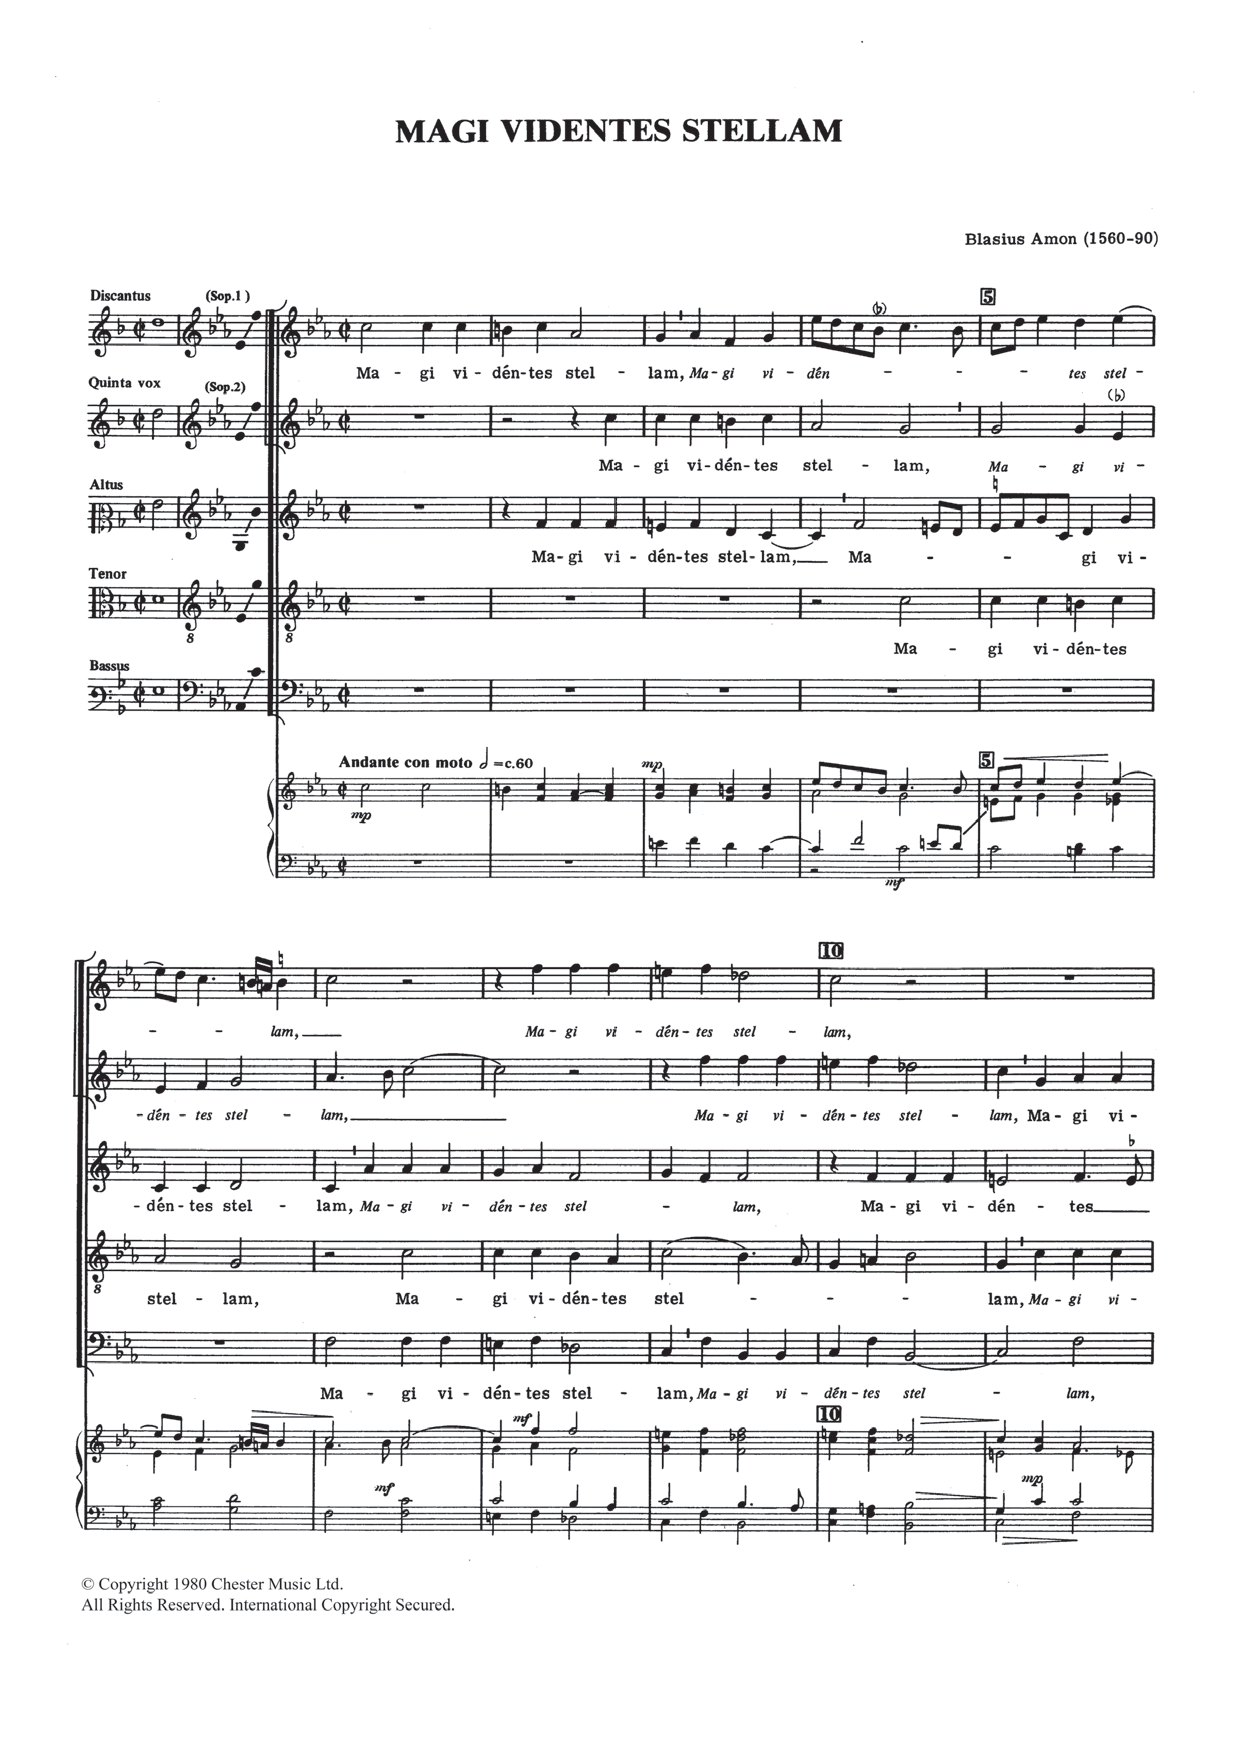 Blasius Amon Magi Videntes Stellam sheet music notes and chords arranged for SATB Choir